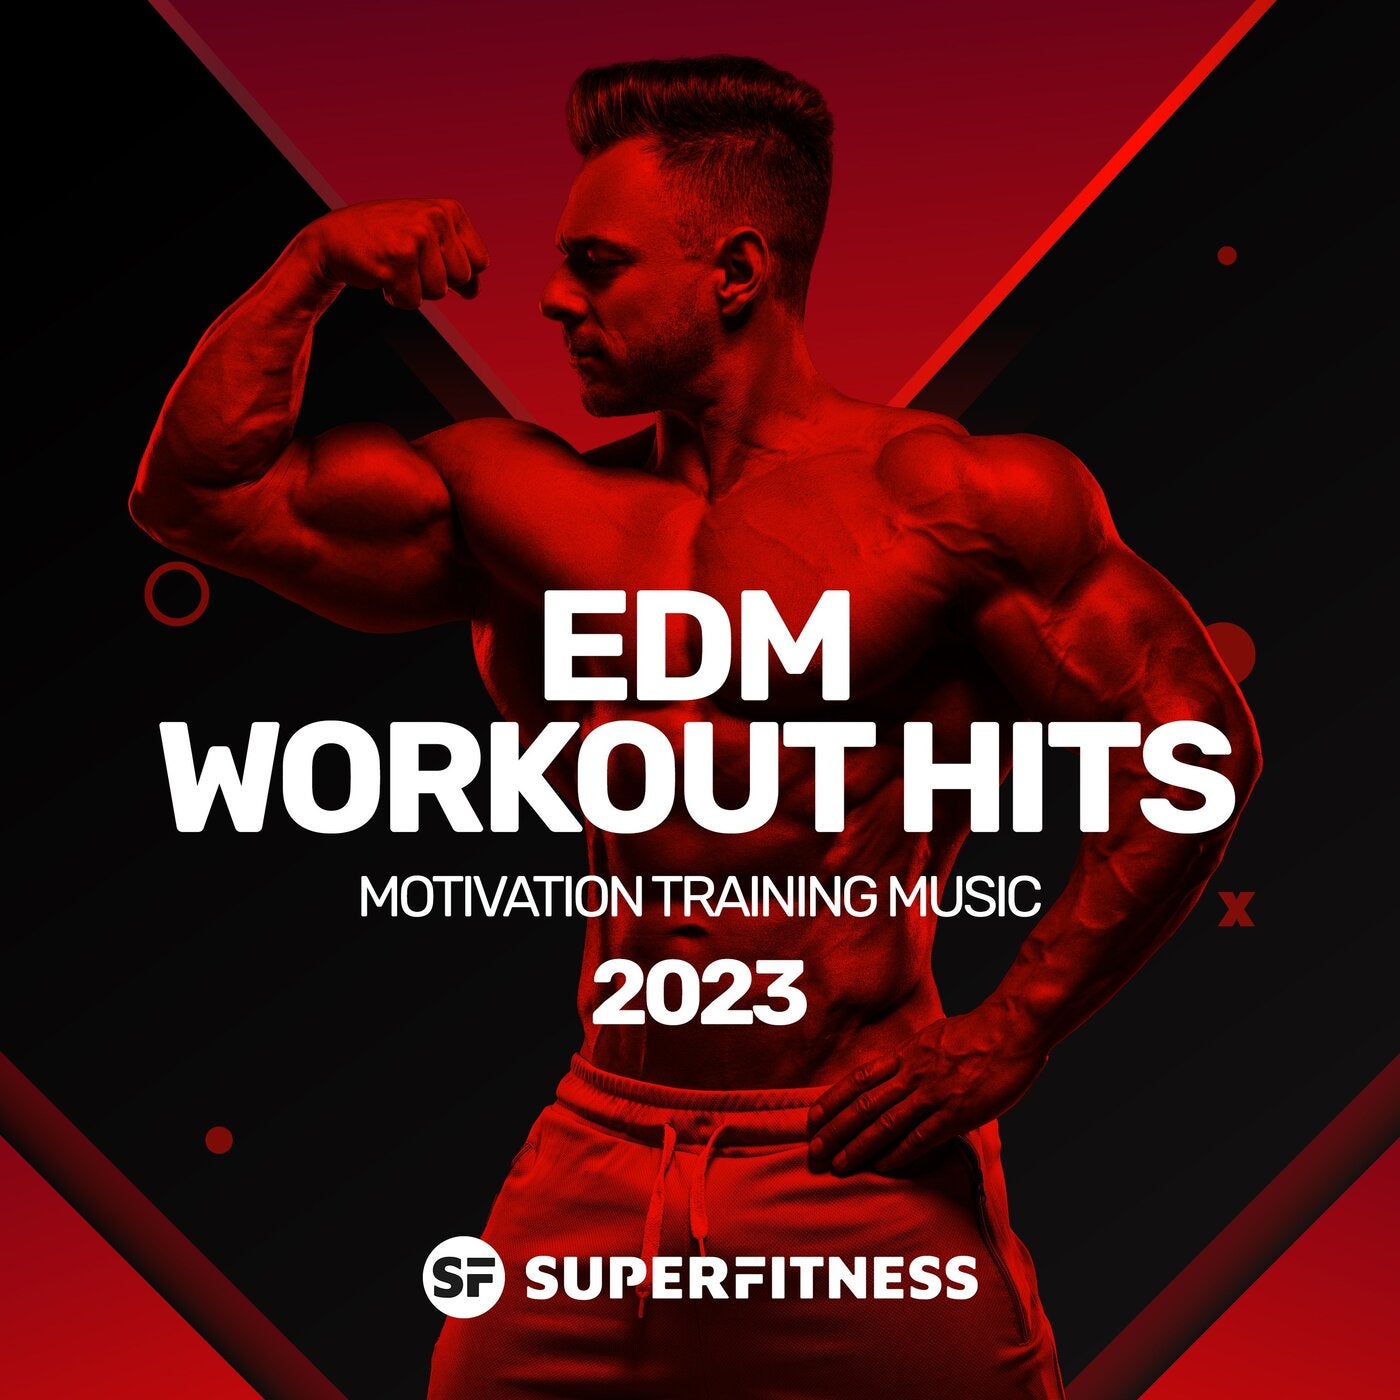 EDM Workout Hits 2023: Motivation Training Music